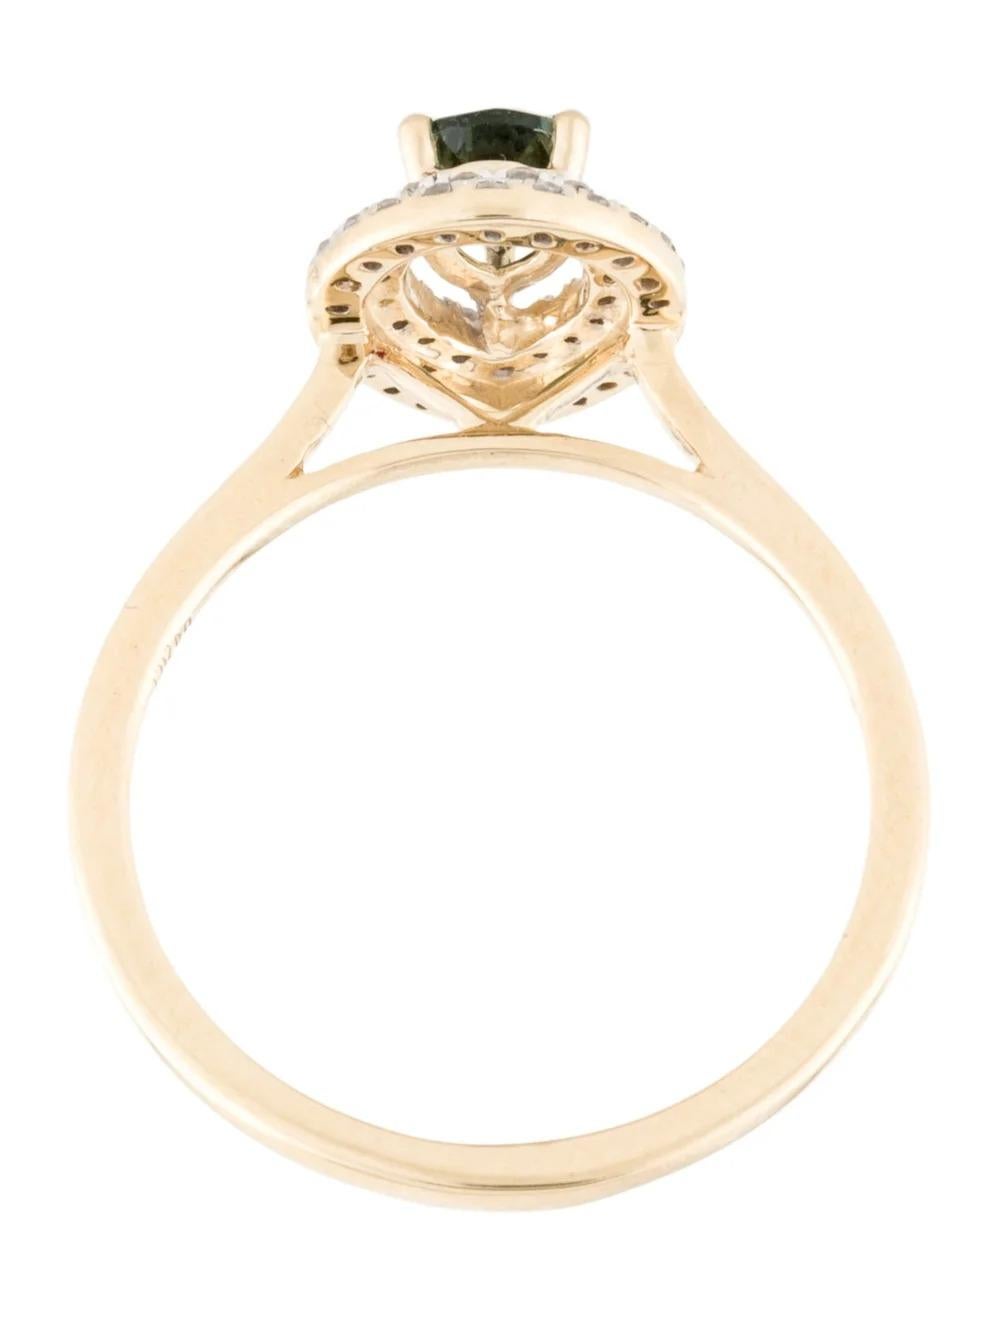 Women's 14K Tourmaline & Diamond Cocktail Ring, Size 6.5 - Stunning Design, Luxury Piece For Sale